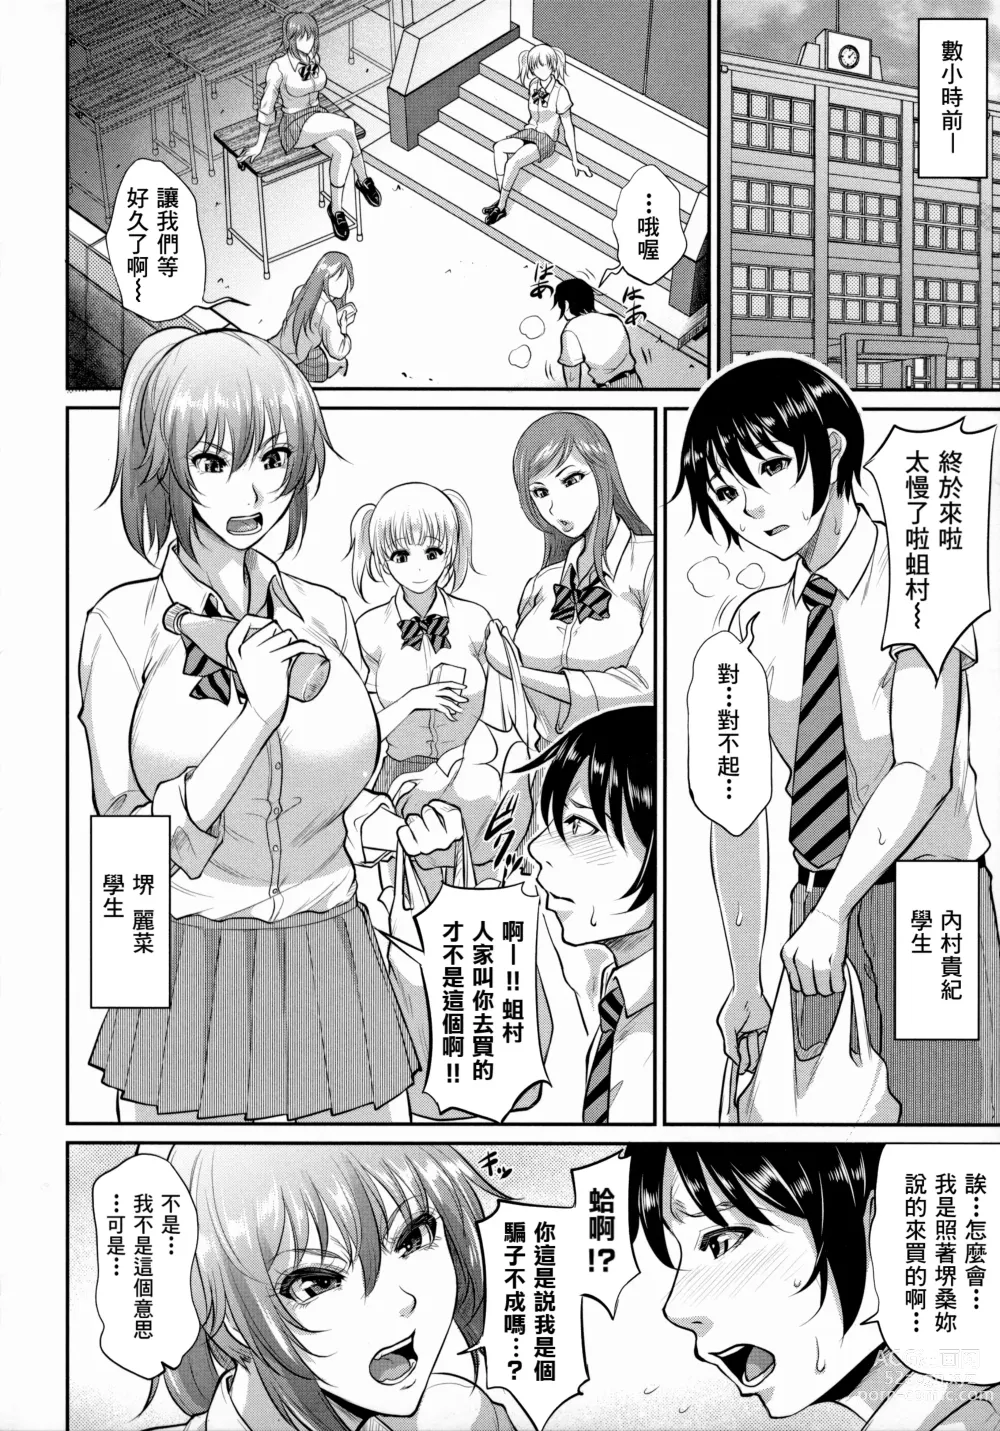 Page 2 of manga Ijimecco